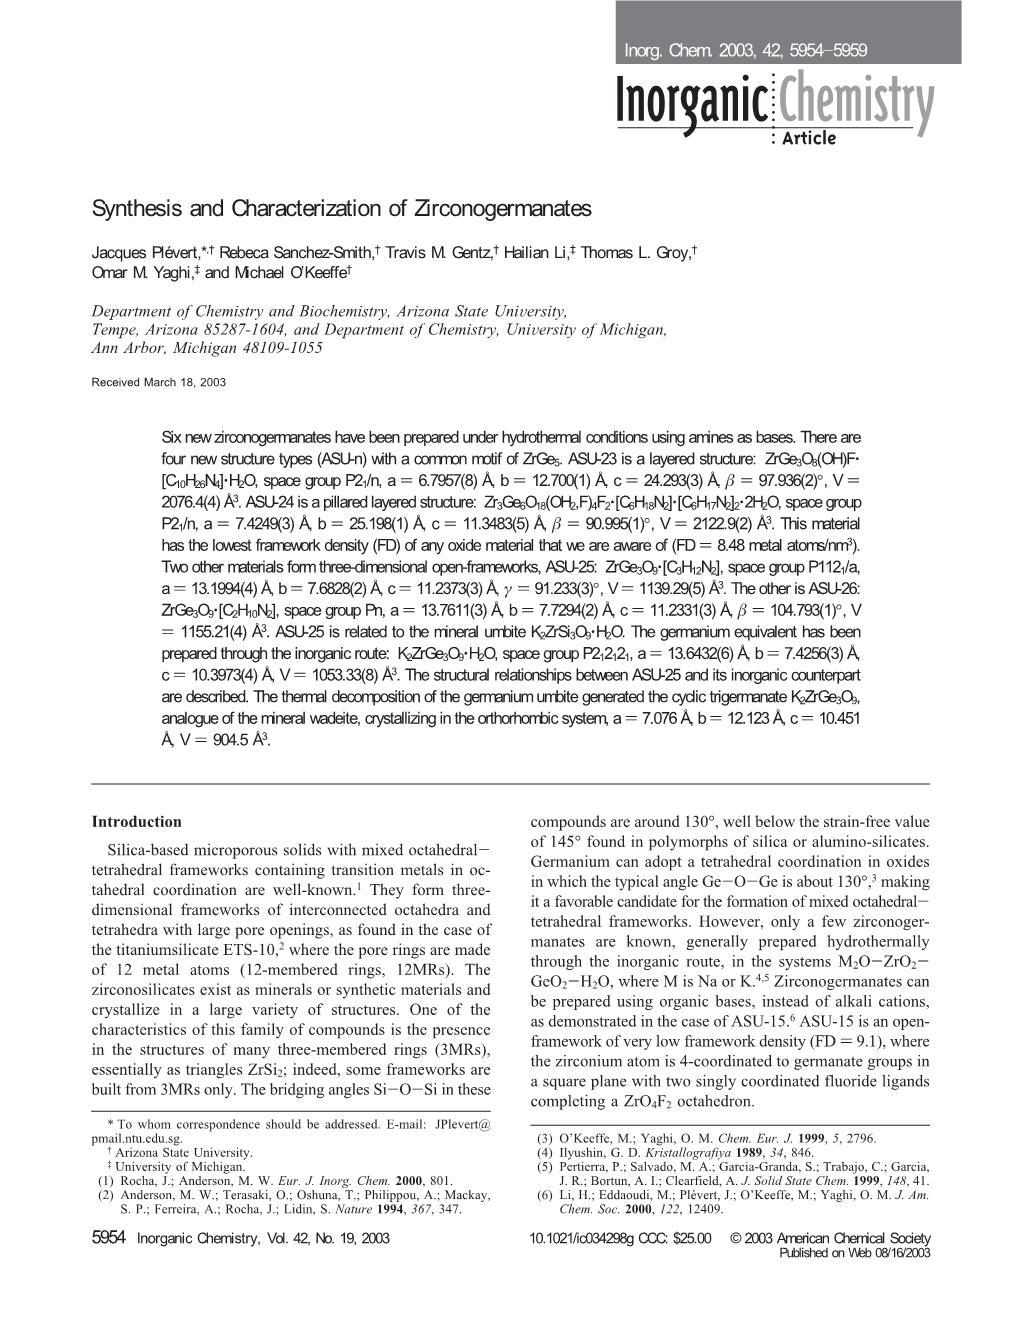 Synthesis and Characterization of Zirconogermanates